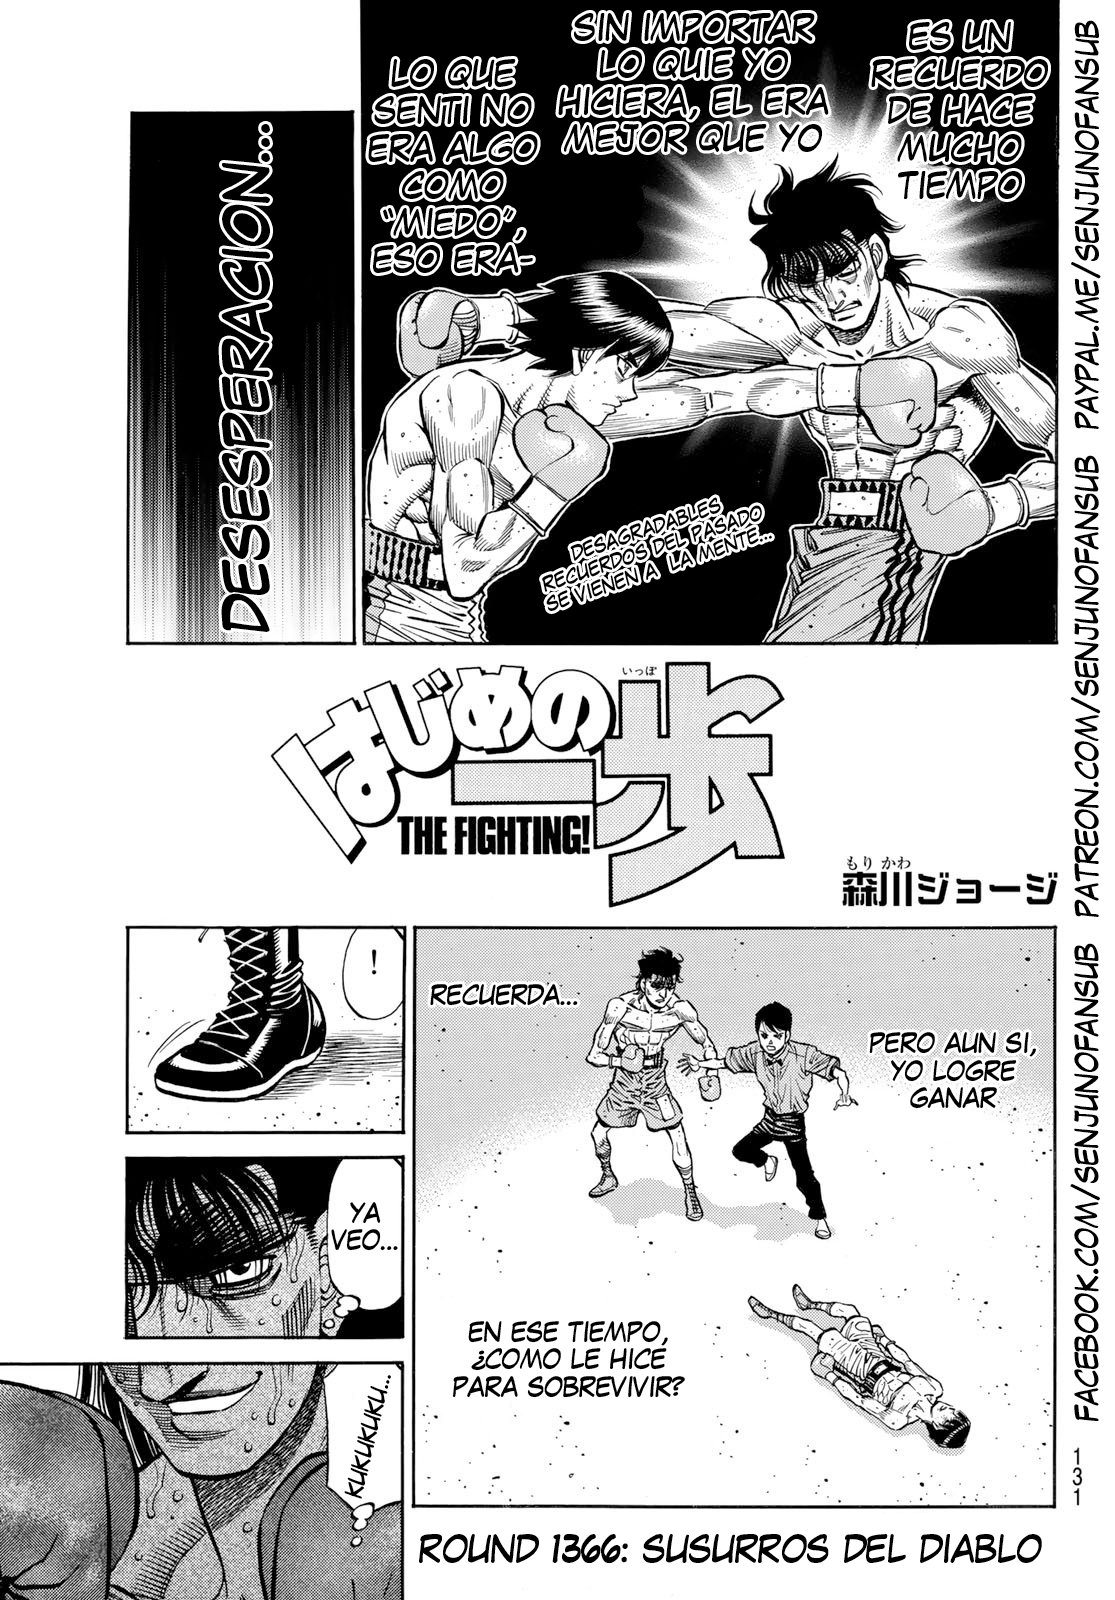 Manga Hajime no Ippo 1,292 Online - InManga